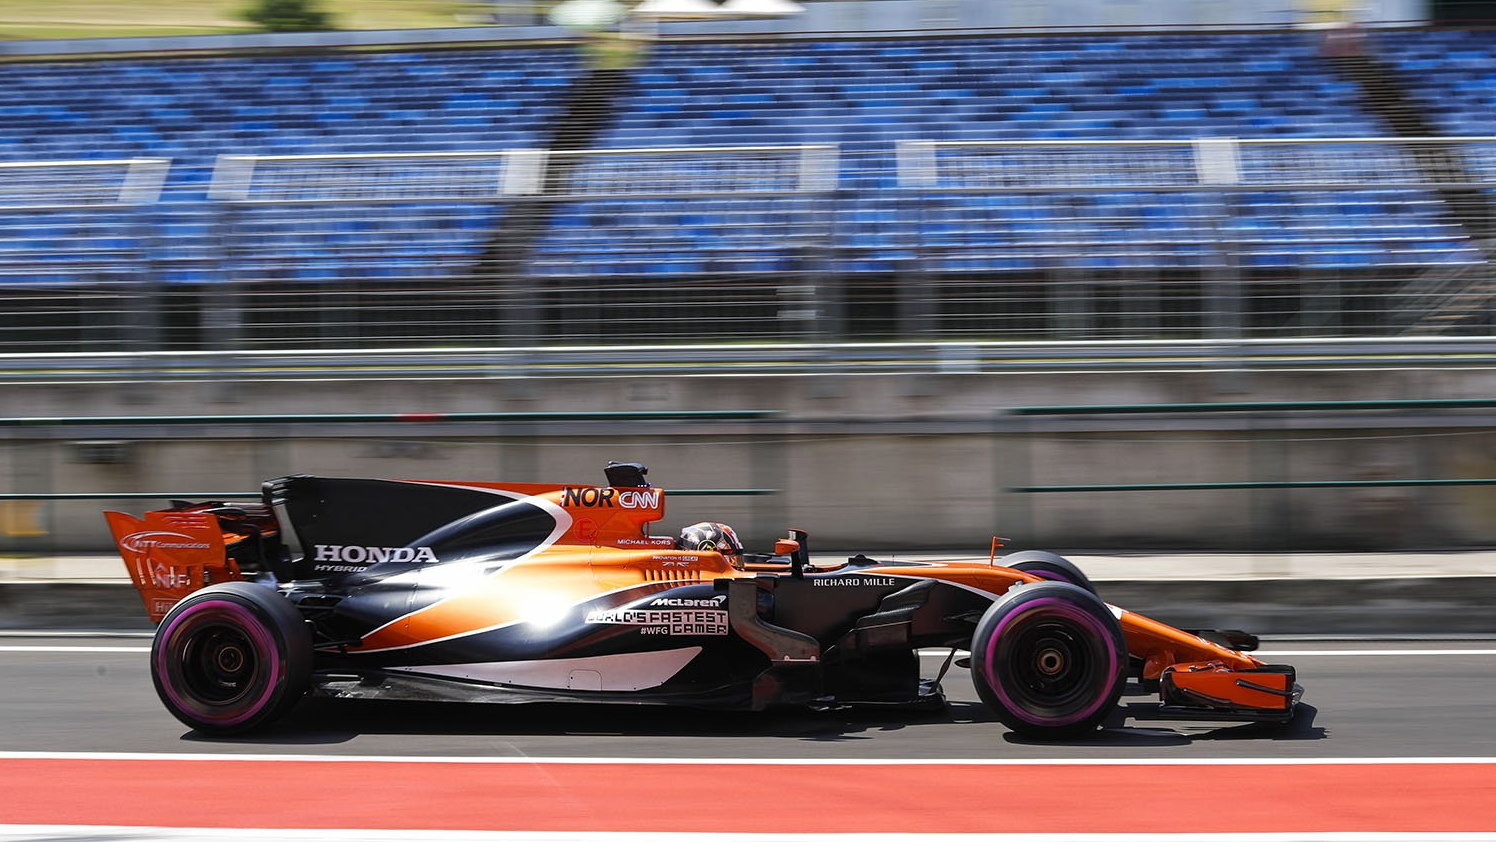 Lando Norris během testů s McLarenem v Maďarsku